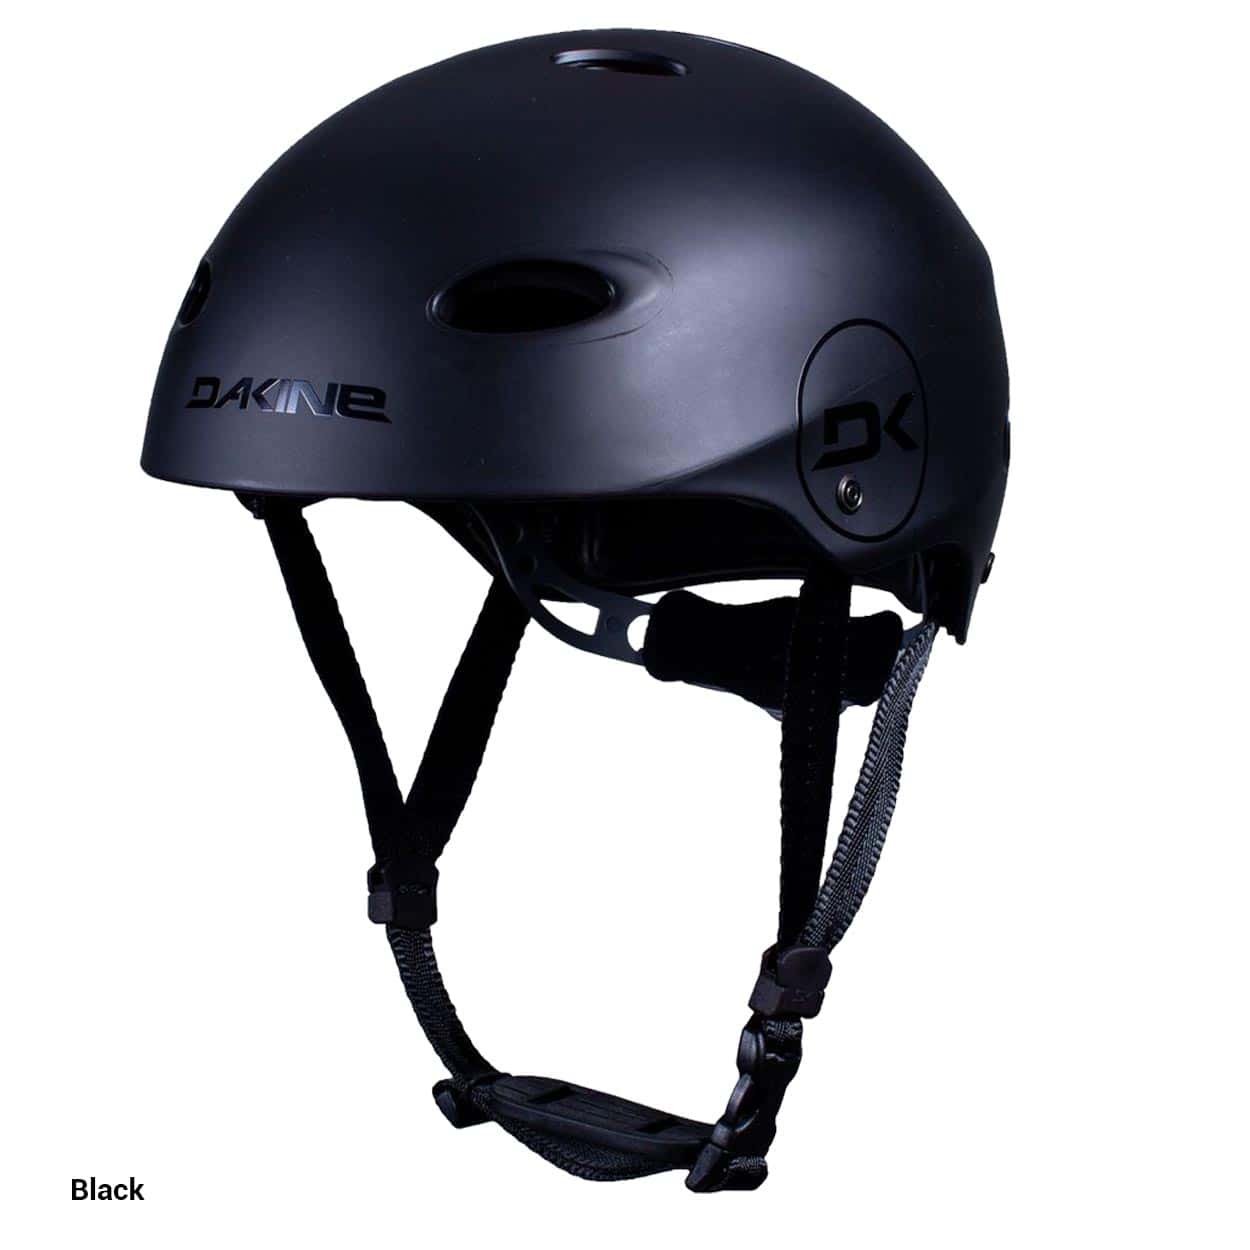 Dakine-Helmet4